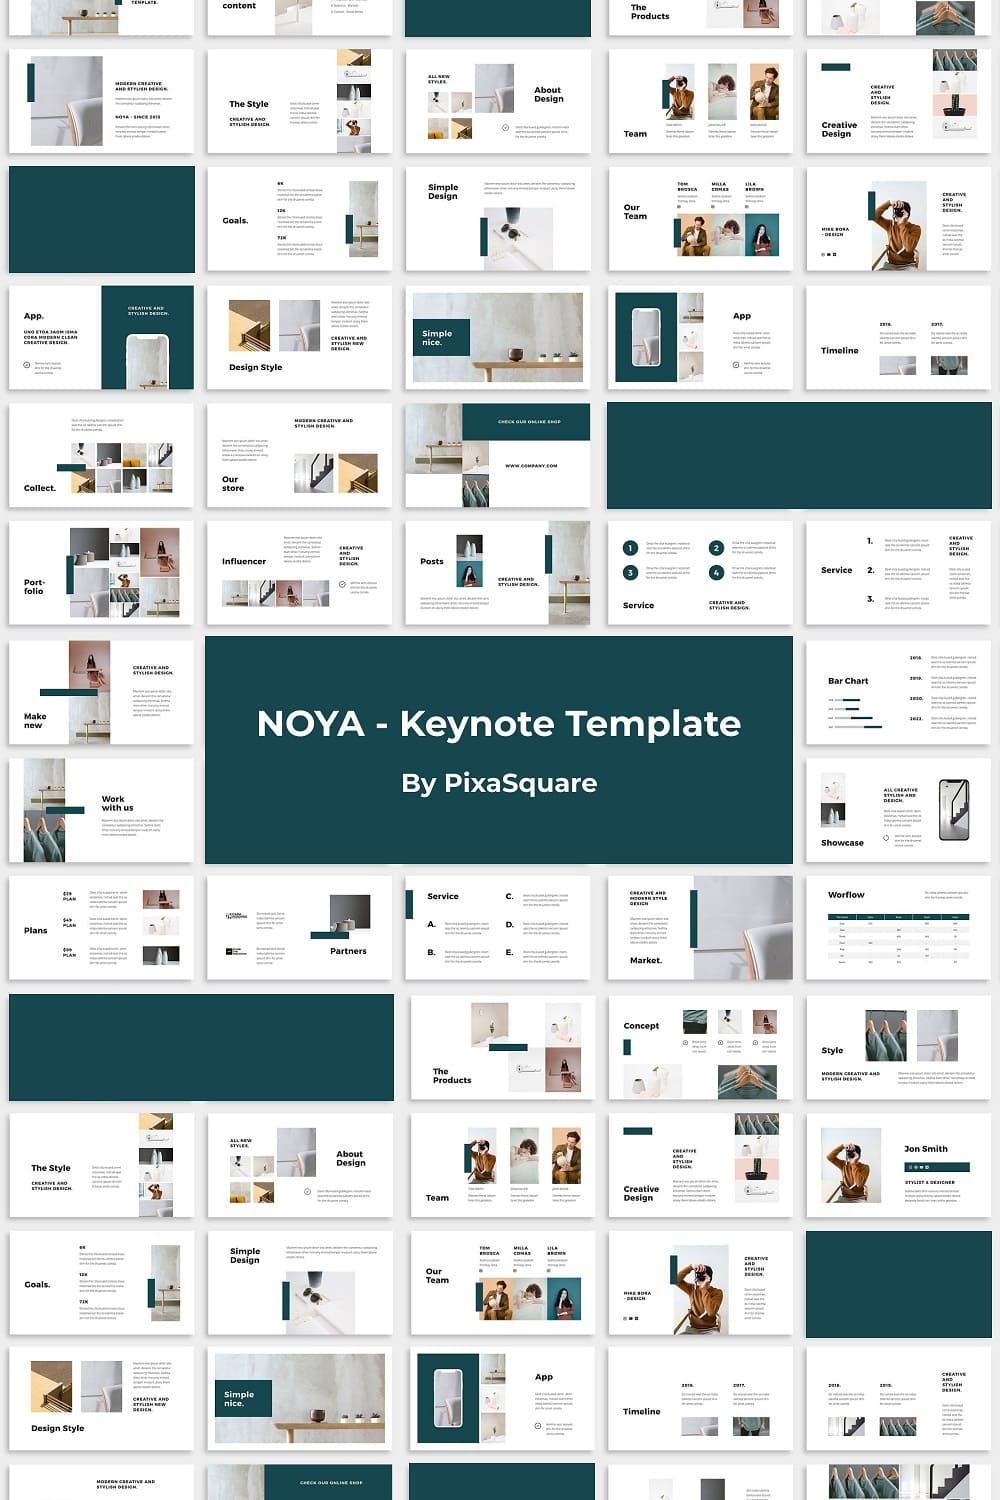 Noya - Green theme keynote template.